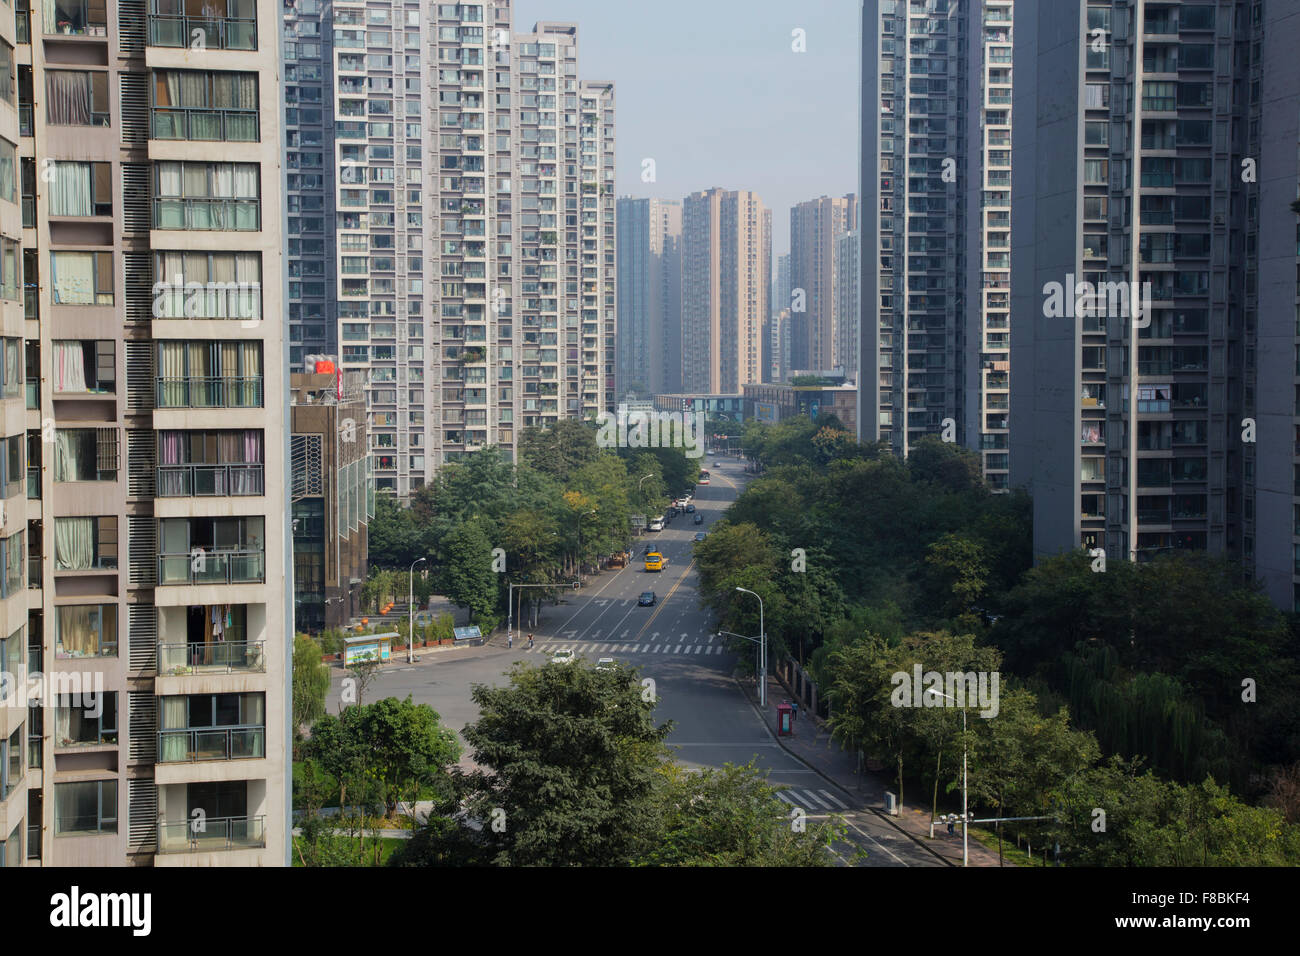 High Rise Apartment Blocks Chengdu City Sichuan Province China LA008744 Stock Photo